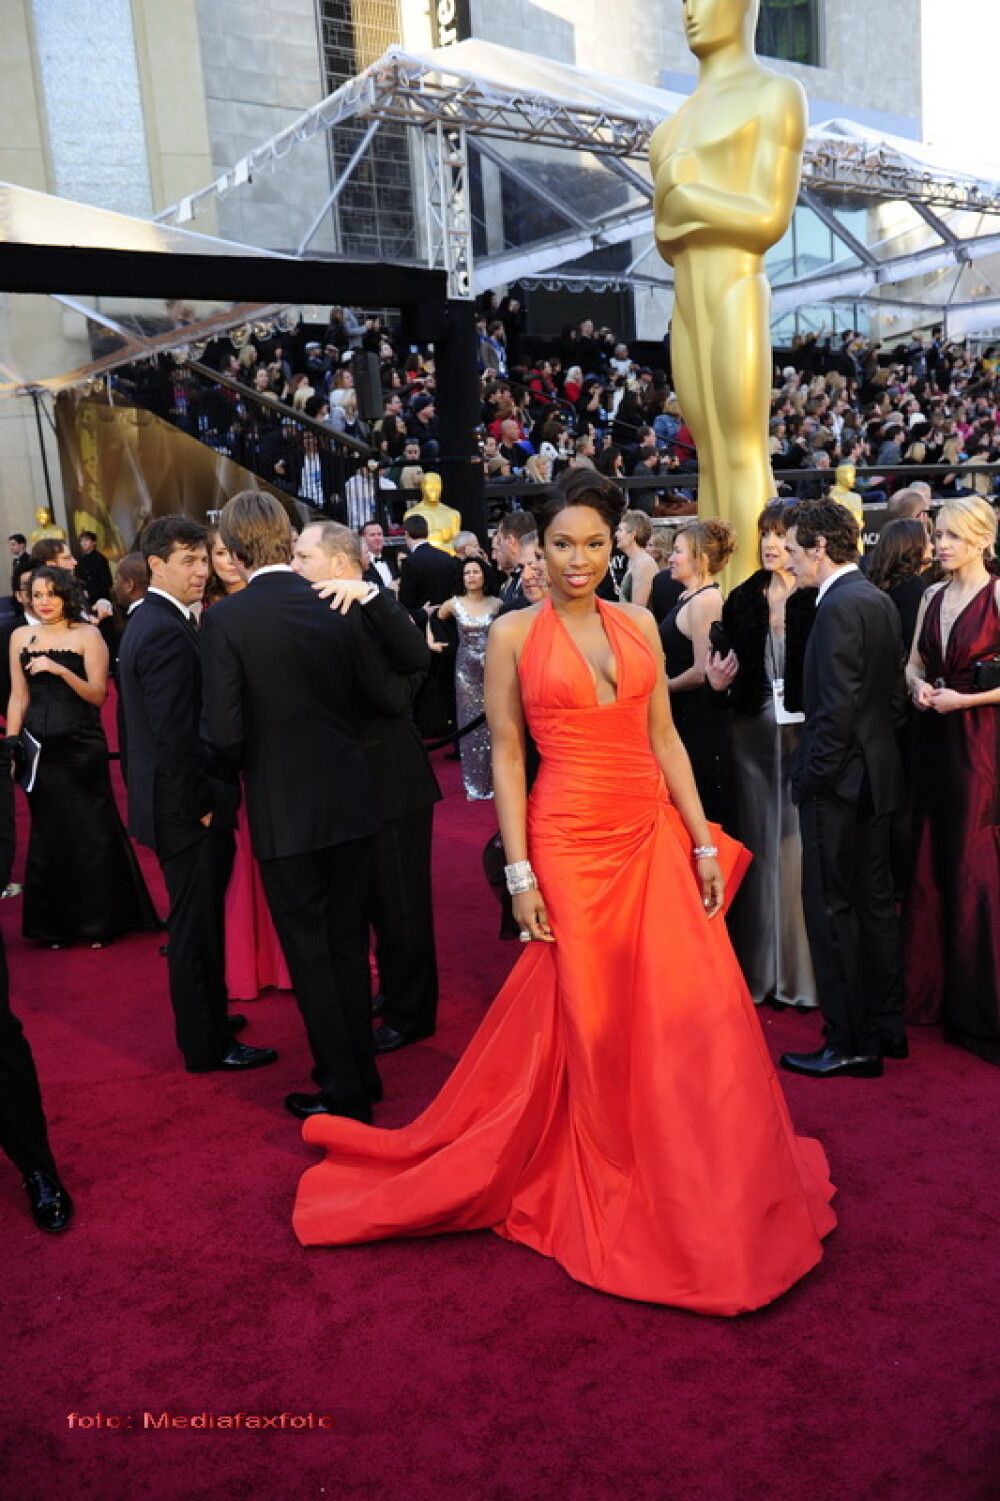 Cele mai frumoase rochii. Rosul si culorile pale, “vedete” la Oscar. FOTO - Imaginea 10